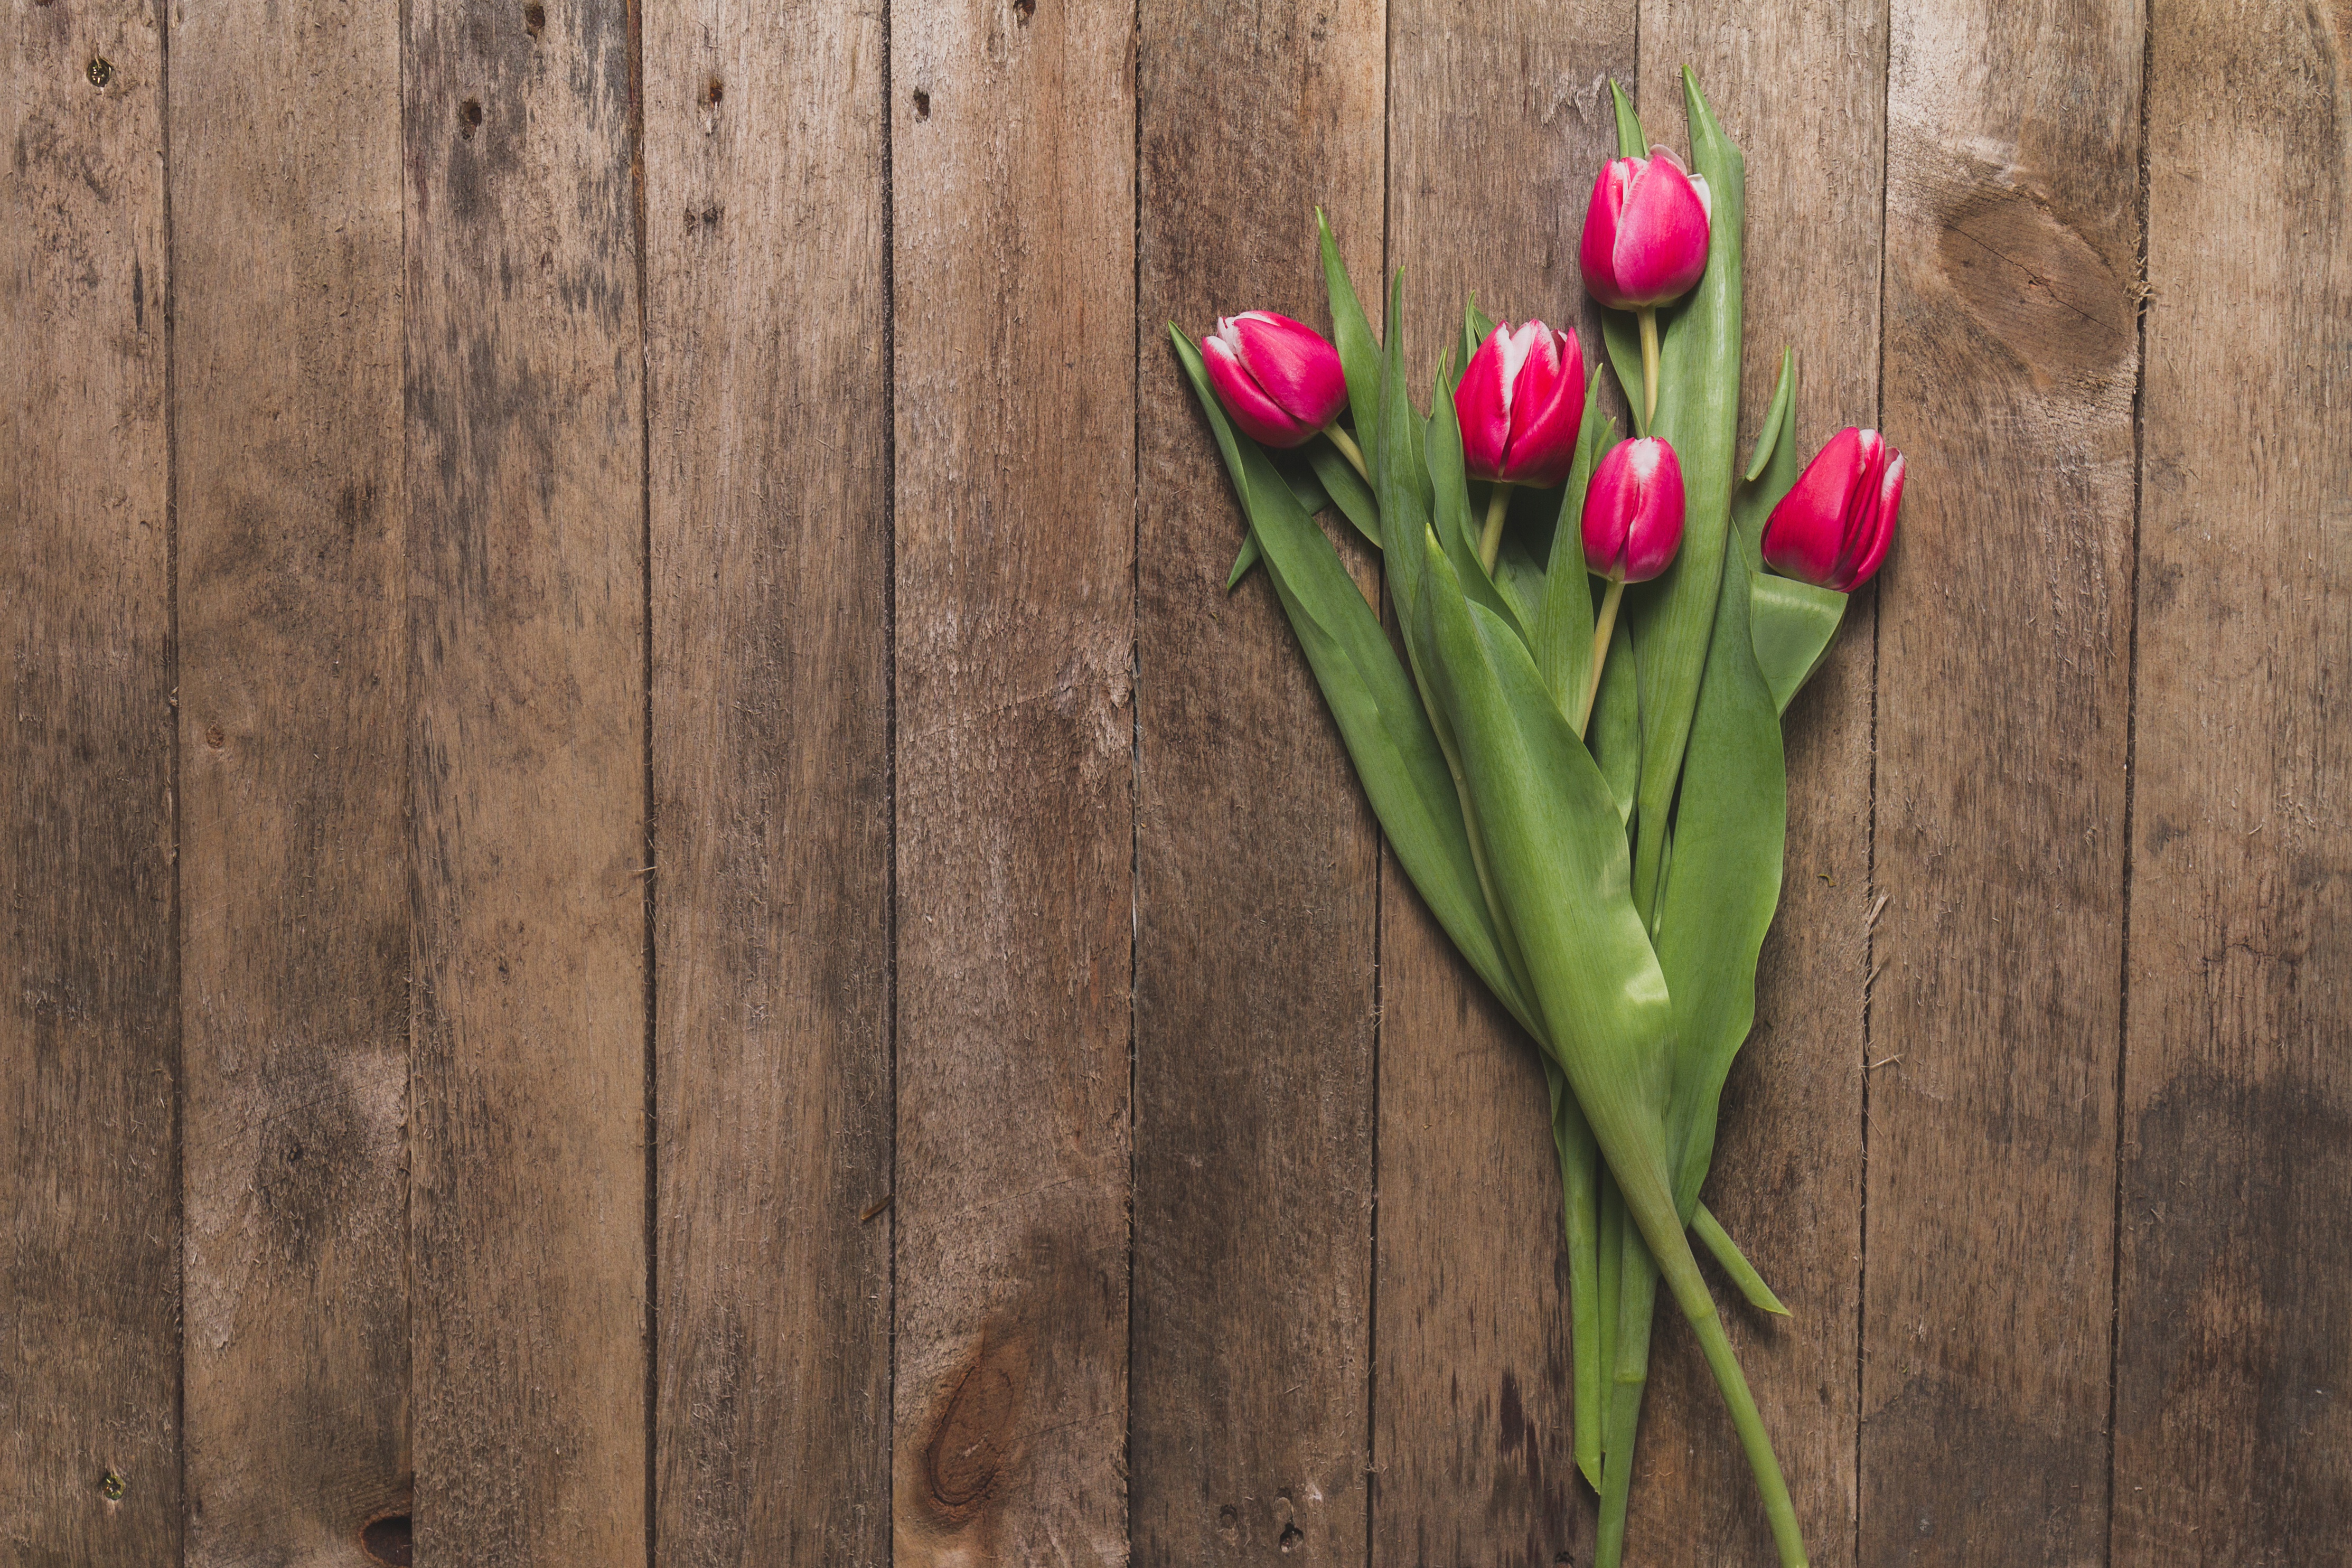 Flower wood мм2. Цветы тюльпаны. Весенние цветы тюльпаны. Цветы на деревянном столе. Тюльпаны фон.